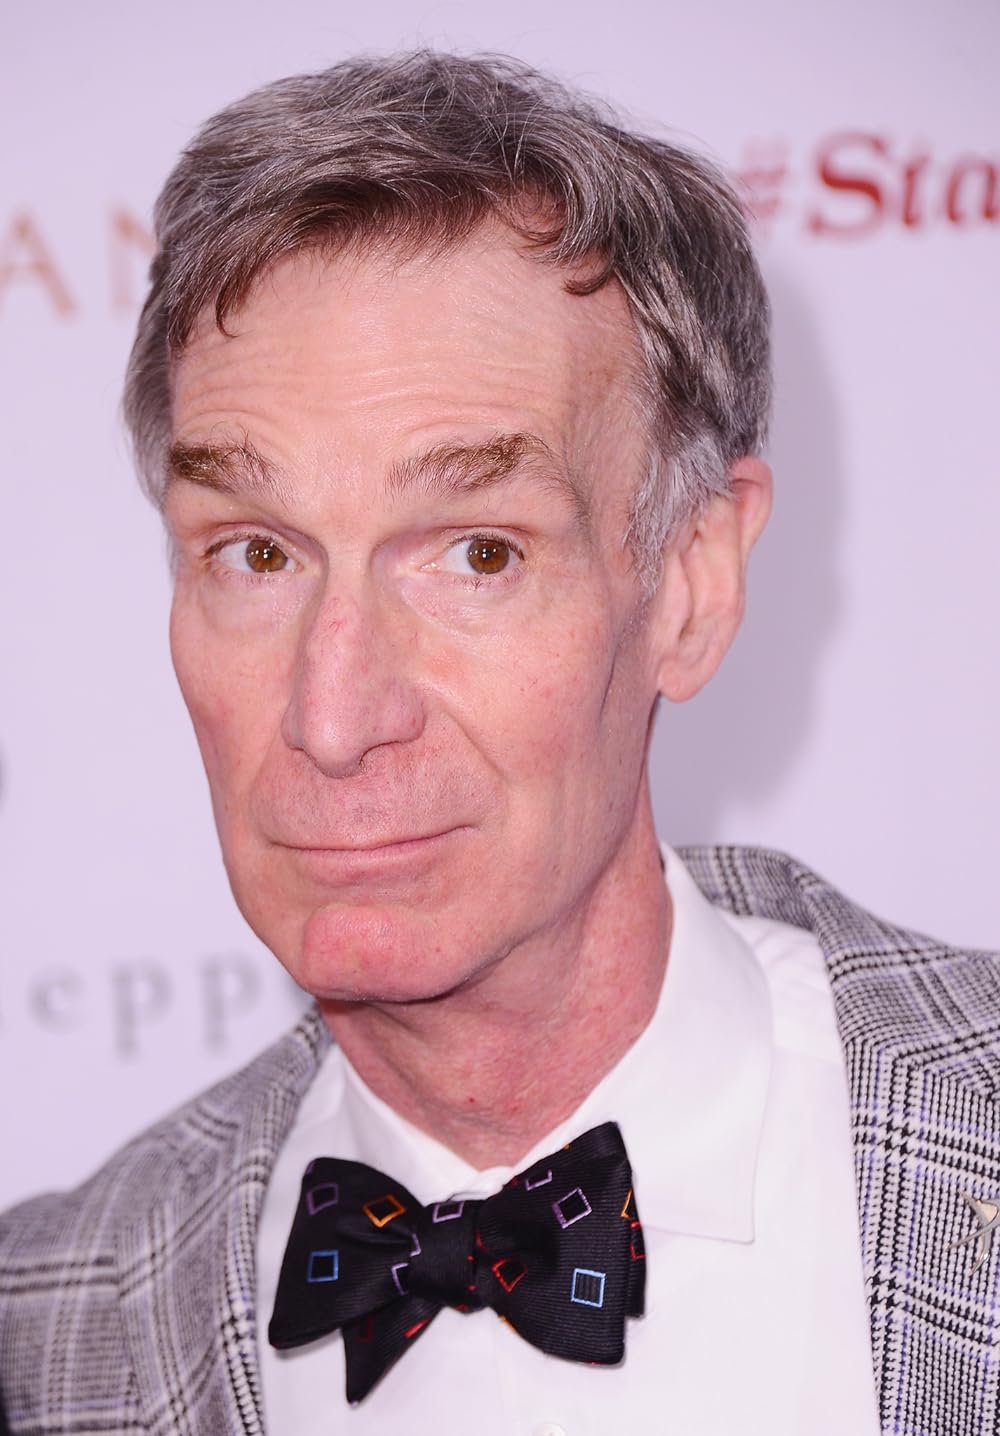 Bill Nye on Christianity